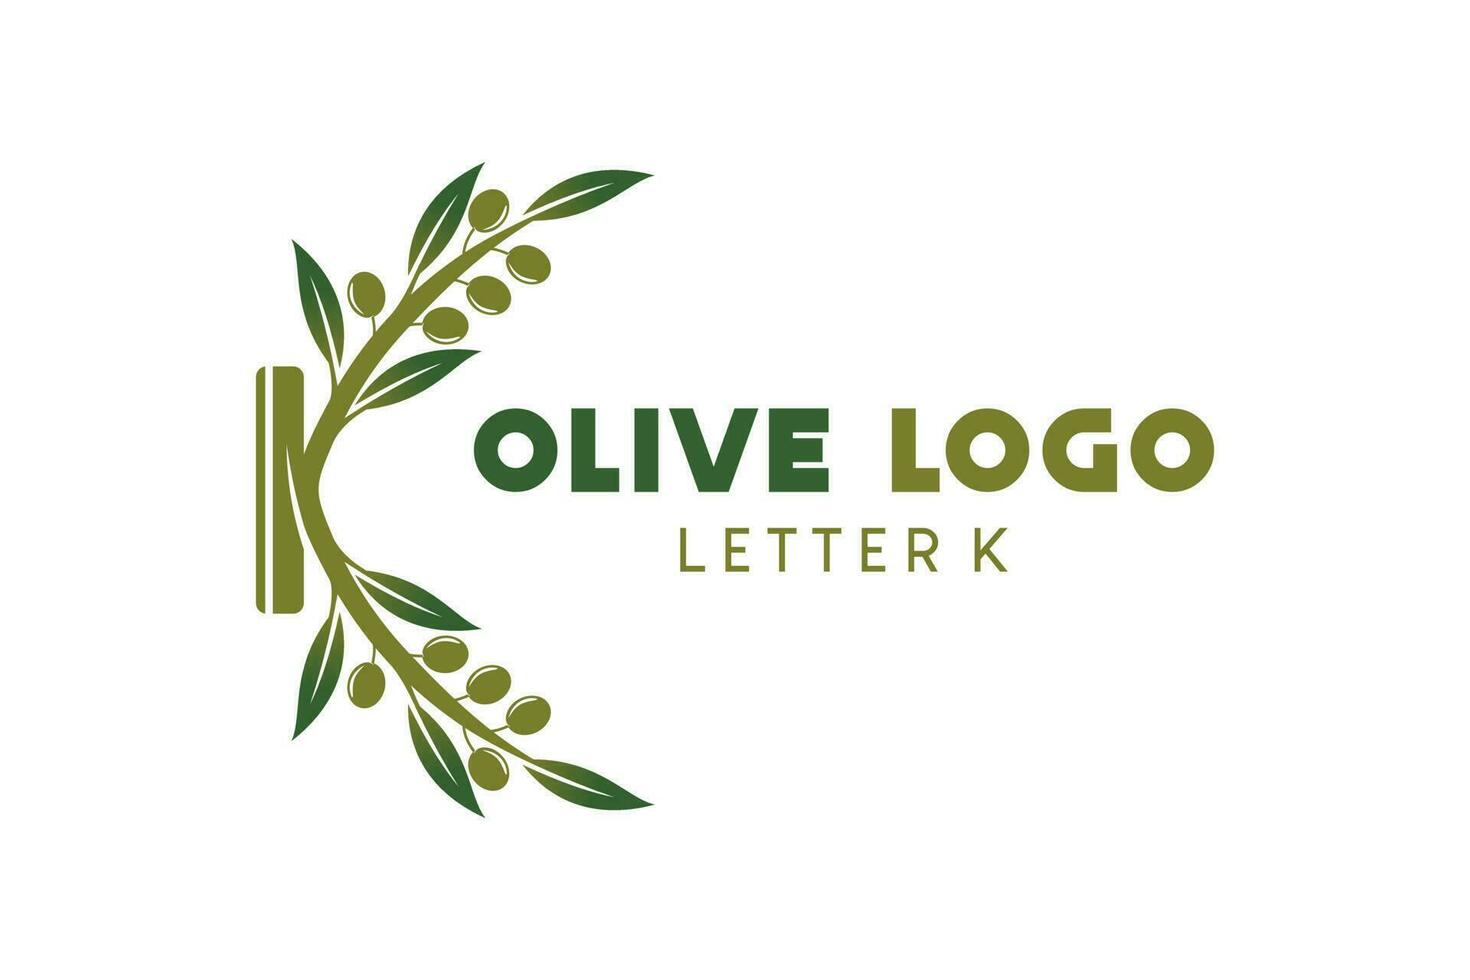 olive logo conception avec lettre k concept, Naturel vert olive vecteur illustration